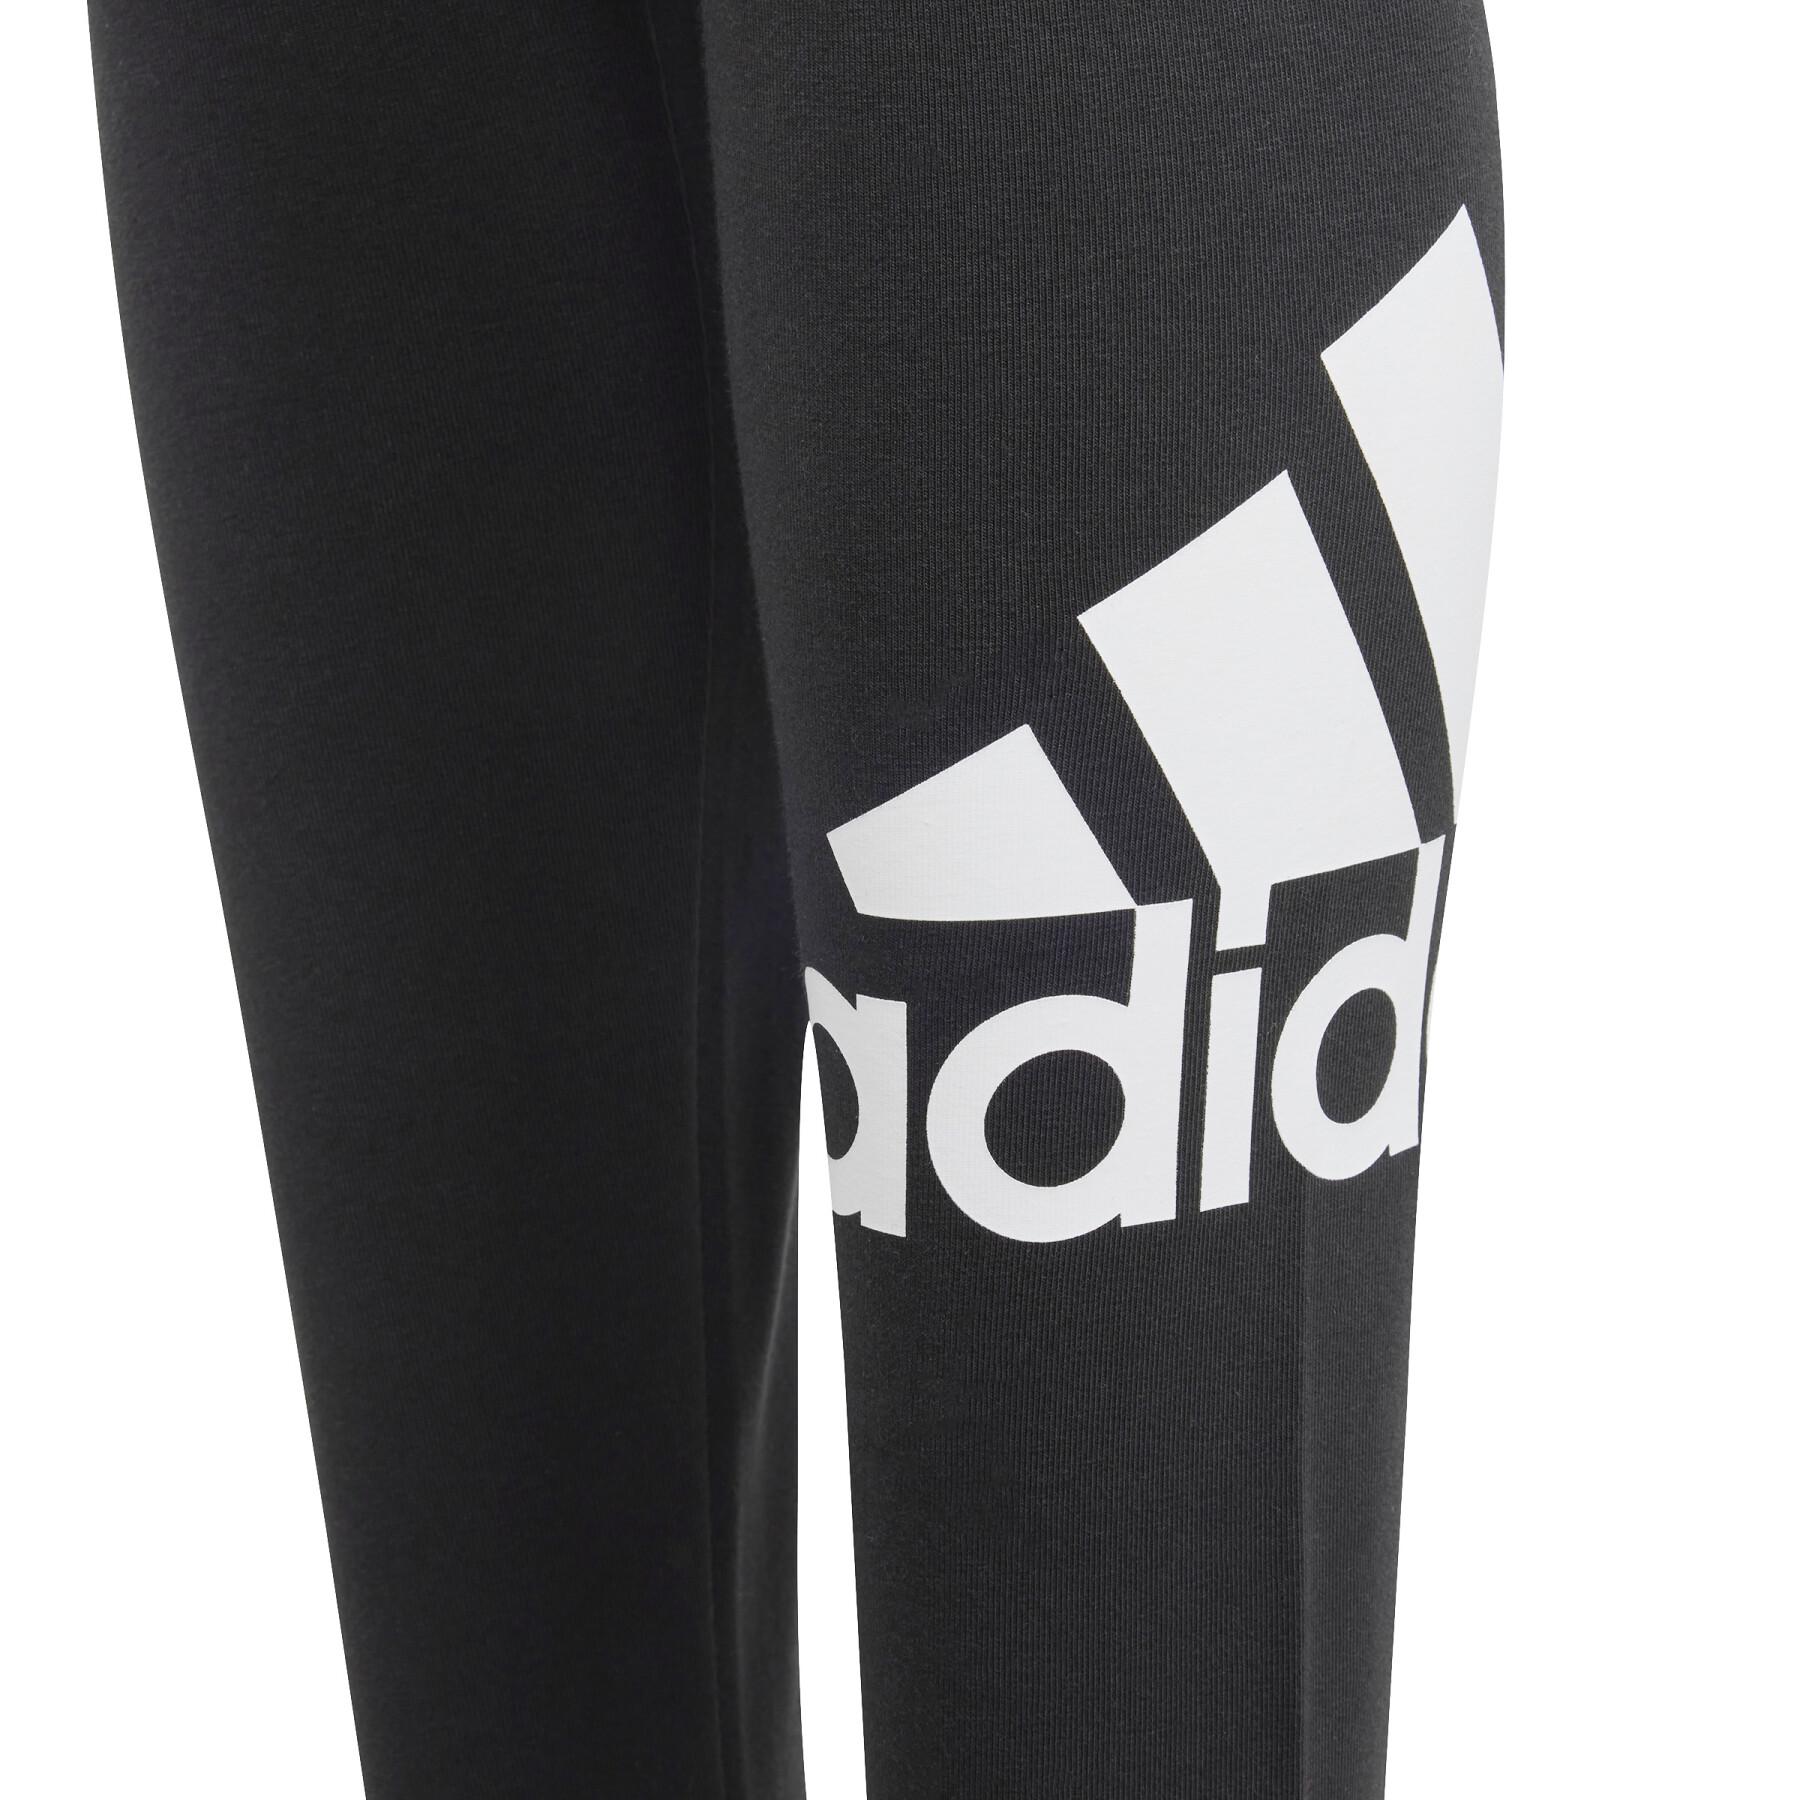 Big Logo - girl Essentials adidas - wear Handball Baselayers Legging Textile cotton -